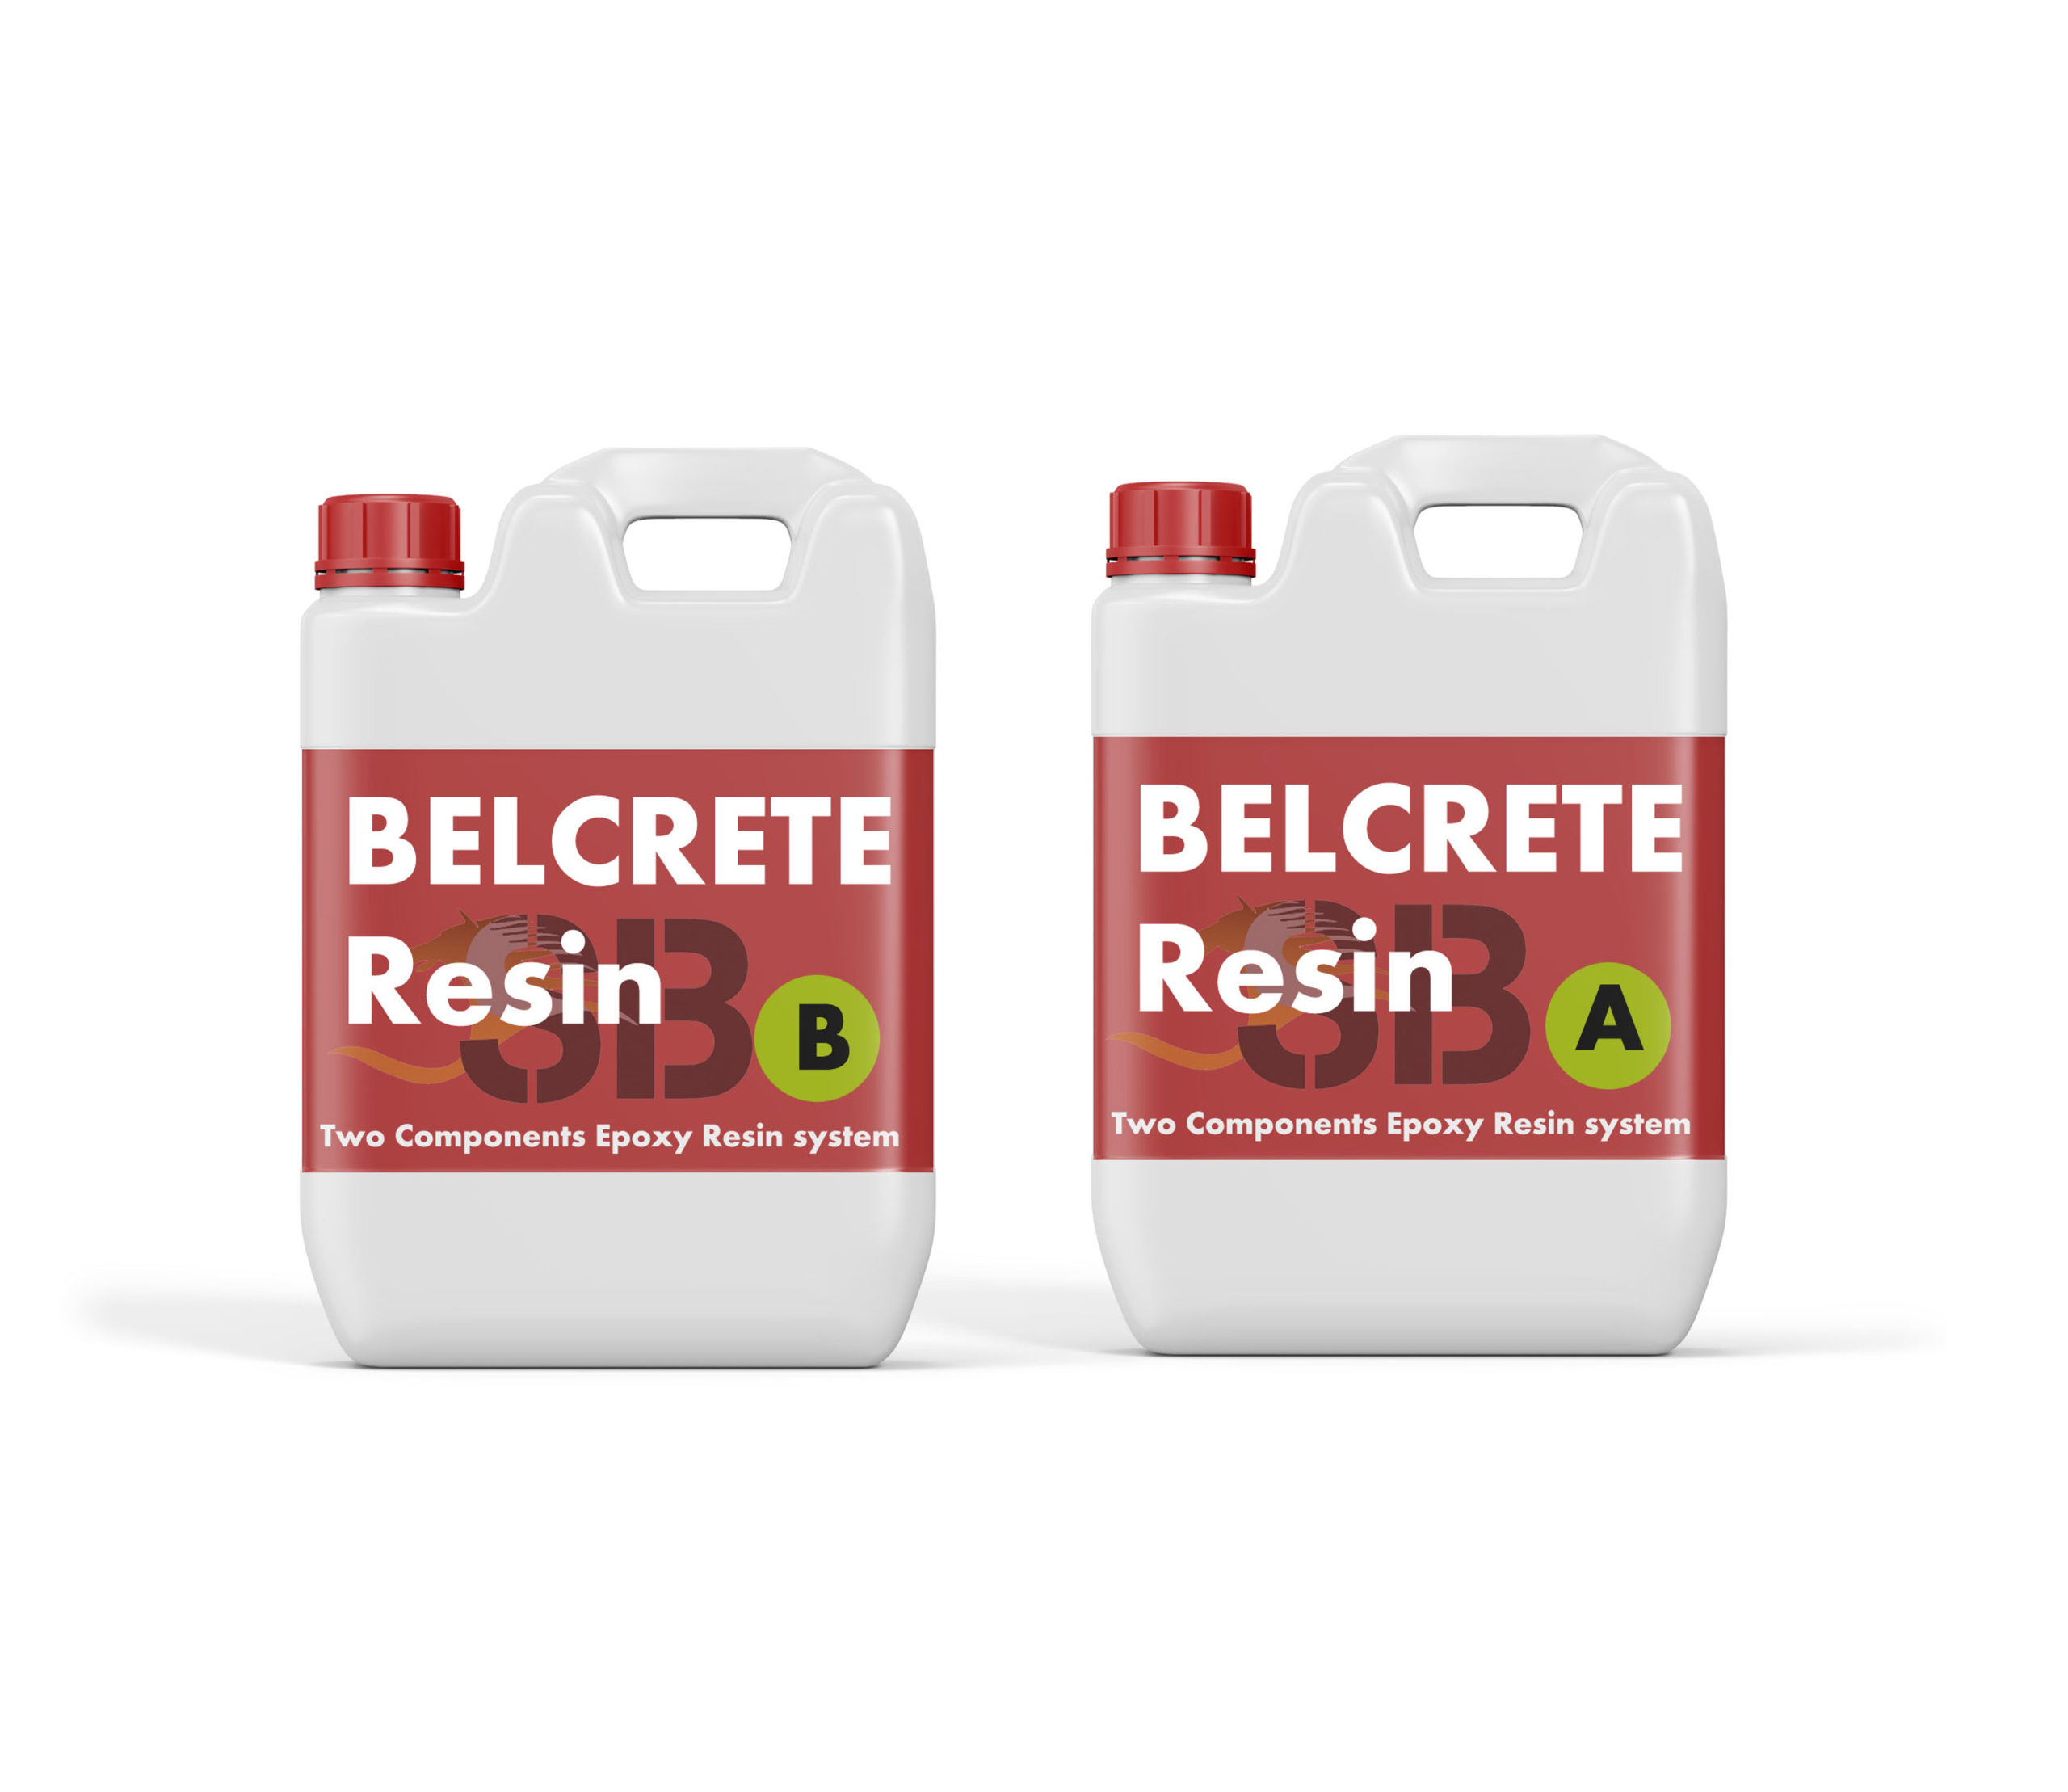 Belcrete Resin